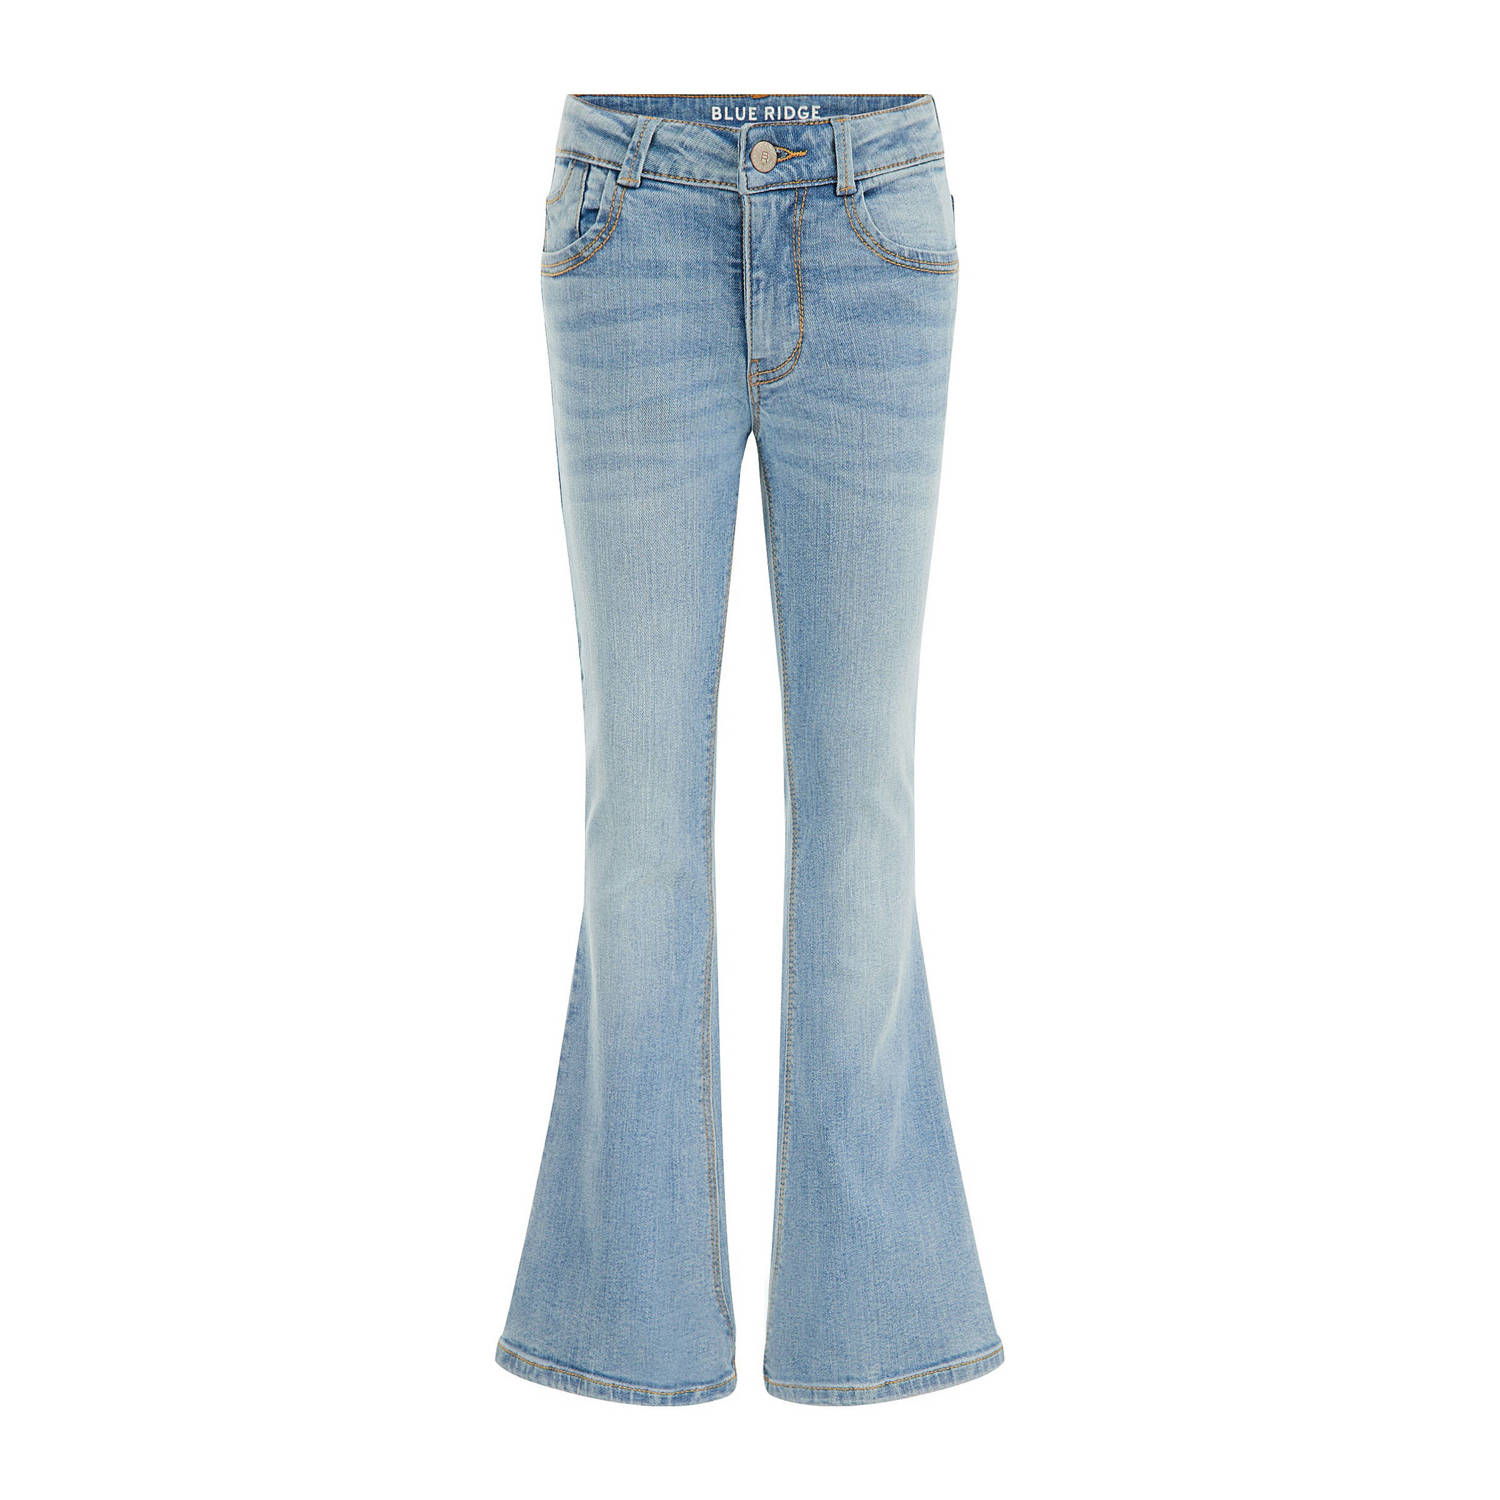 WE Fashion Blue Ridge flared jeans blue used denim Broek Blauw Meisjes Stretchdenim 122